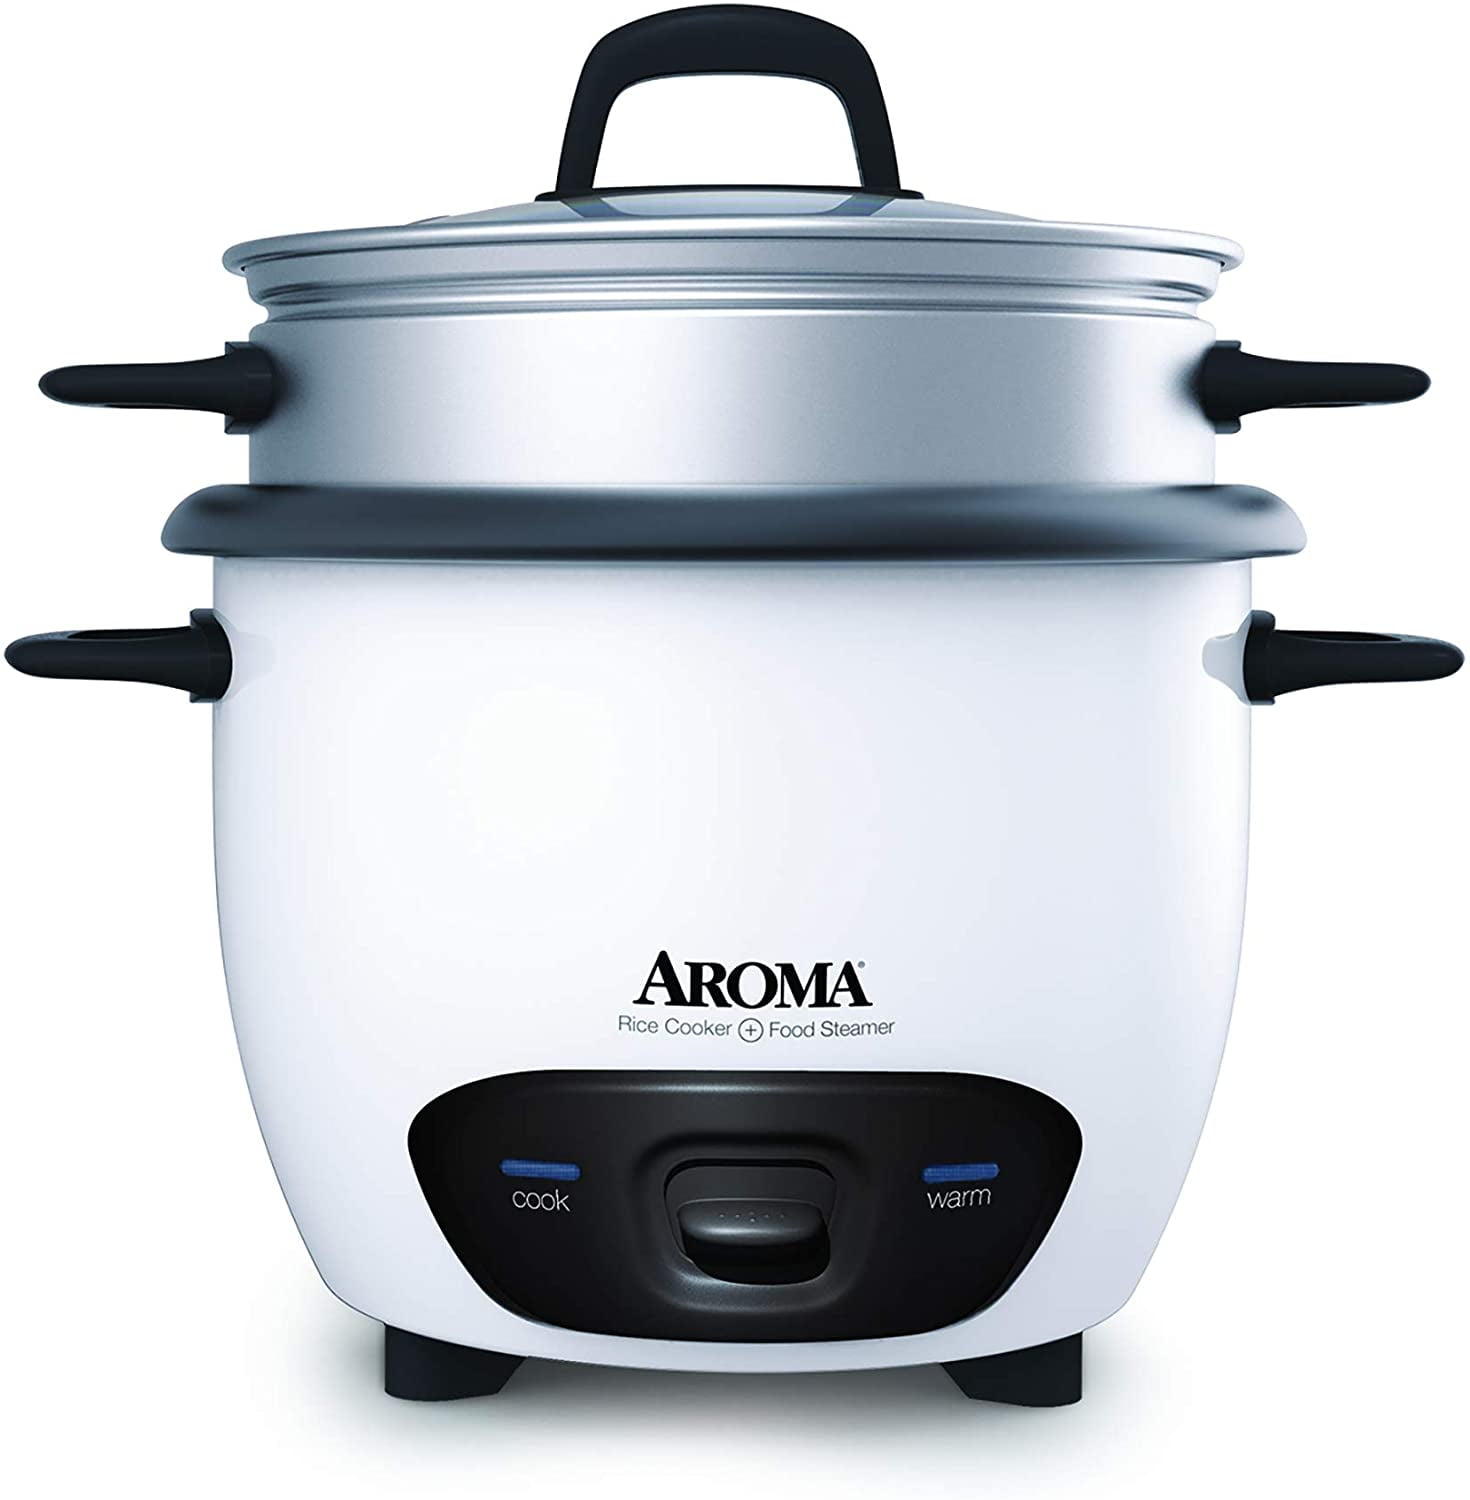 Restored Aroma Housewares 20-Cup Rice Cooker & Food Steamer ARC-360-NGP  (Refurbished) 